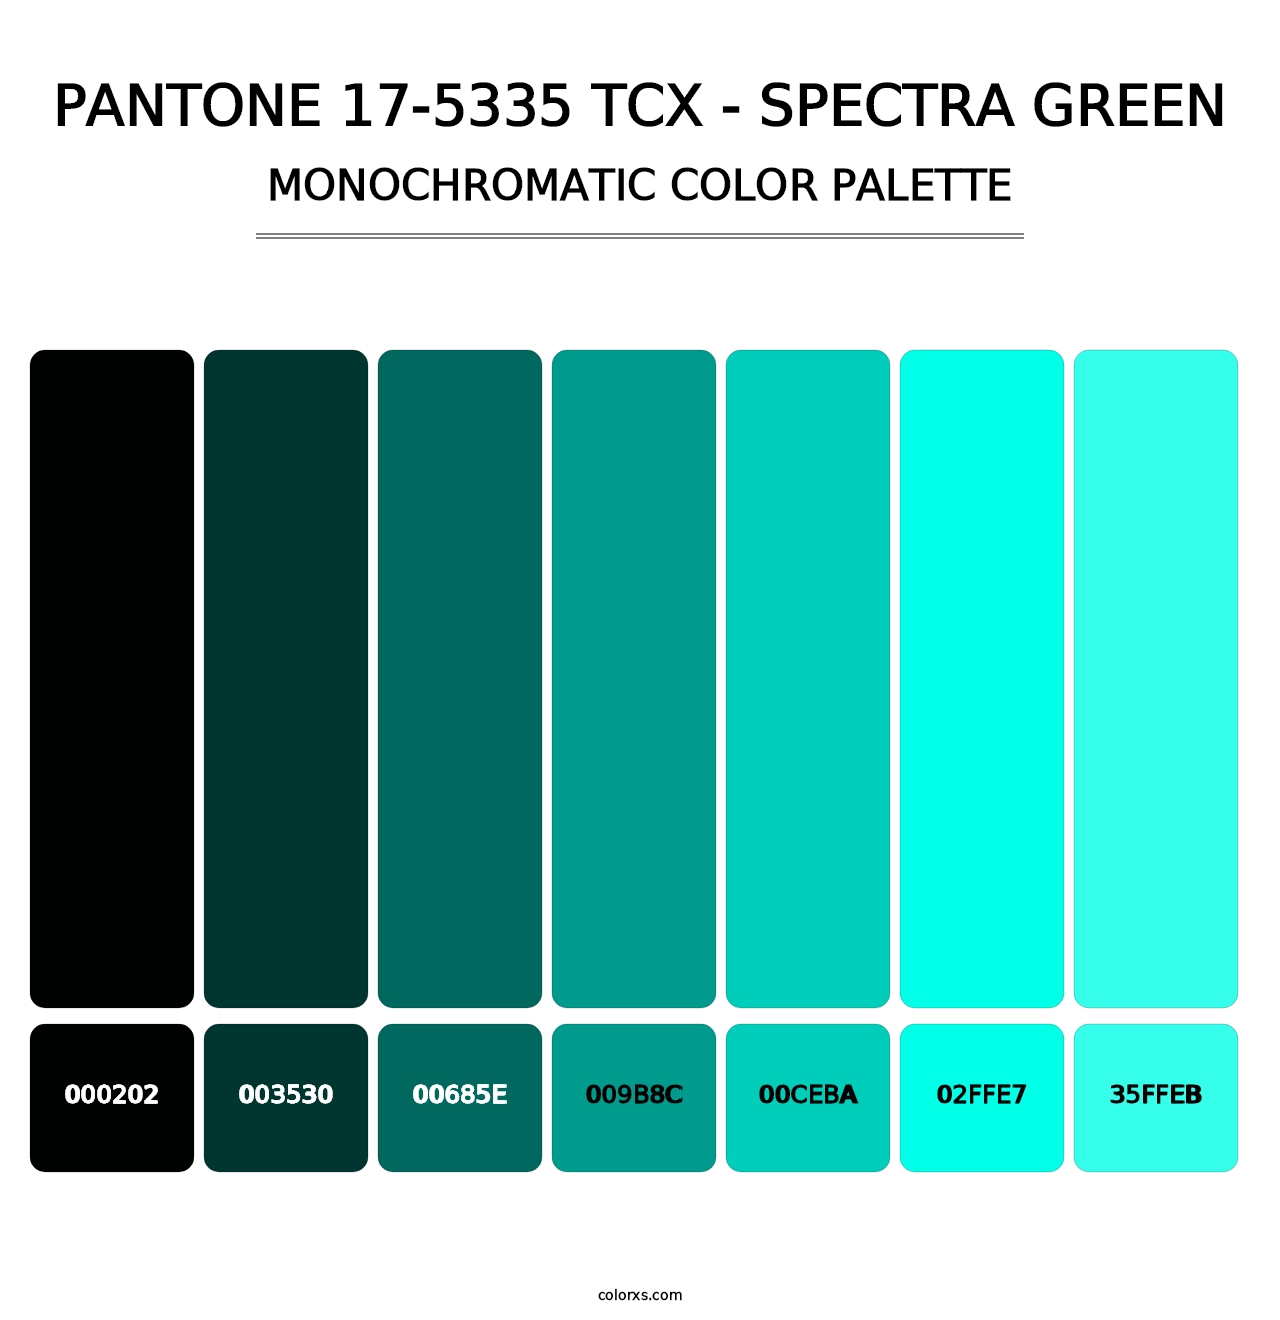 PANTONE 17-5335 TCX - Spectra Green - Monochromatic Color Palette